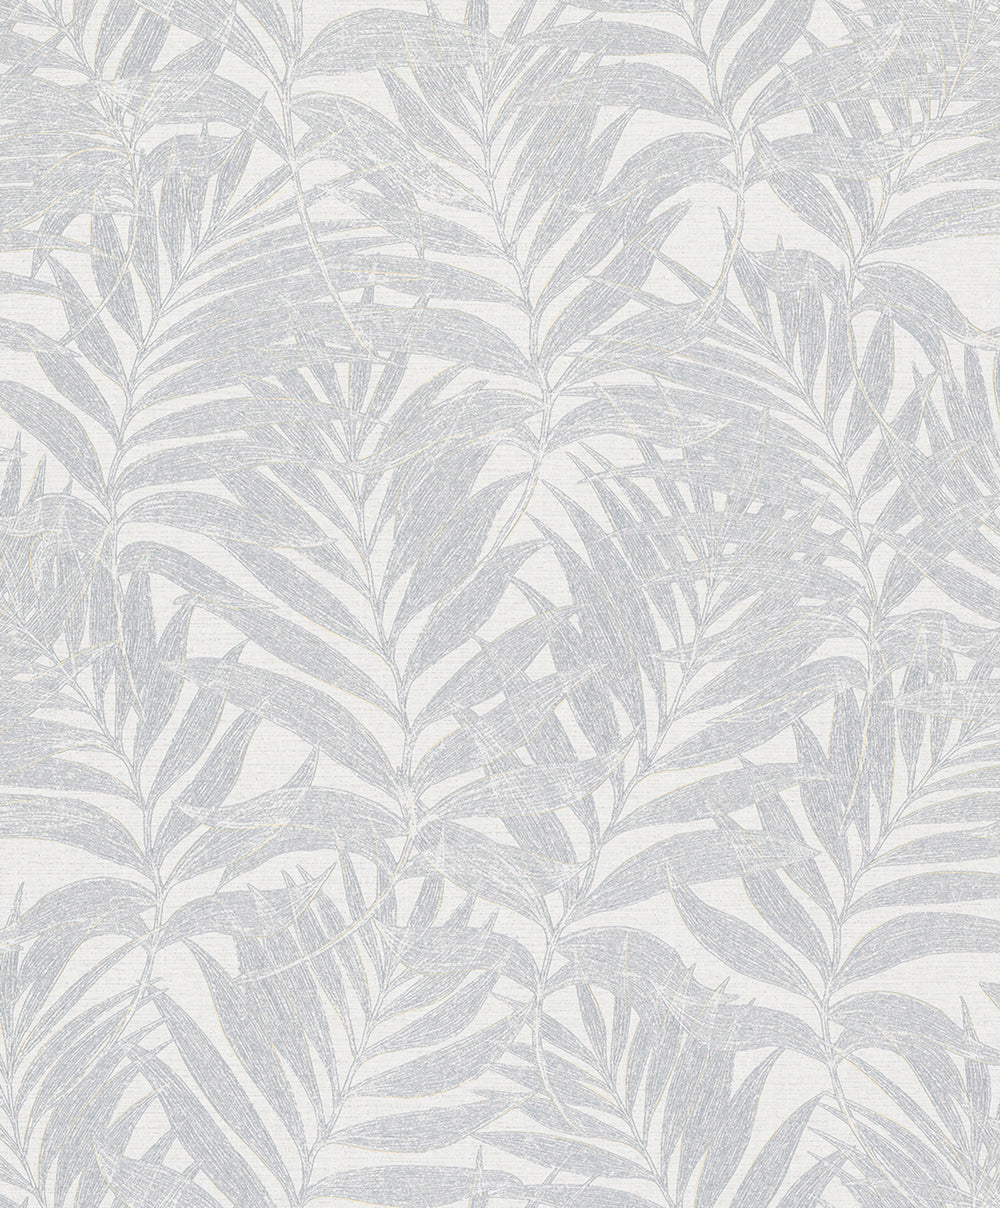 Habitat - Leaves botanical wallpaper Marburg Roll White-Silver  34001